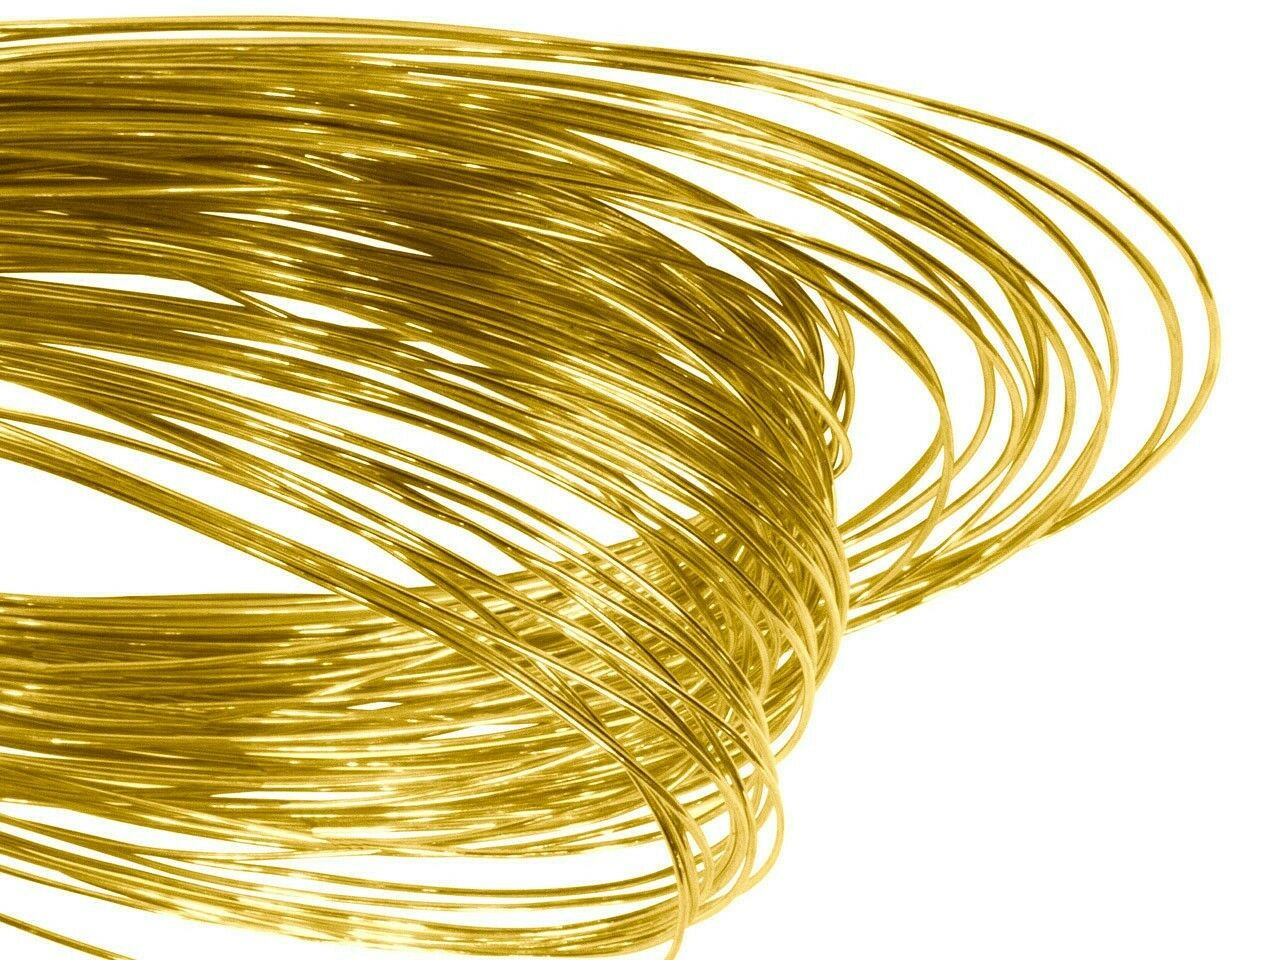 18ct Gold Solder Wire Easy Jewellery Repair Hallmarkable Easy